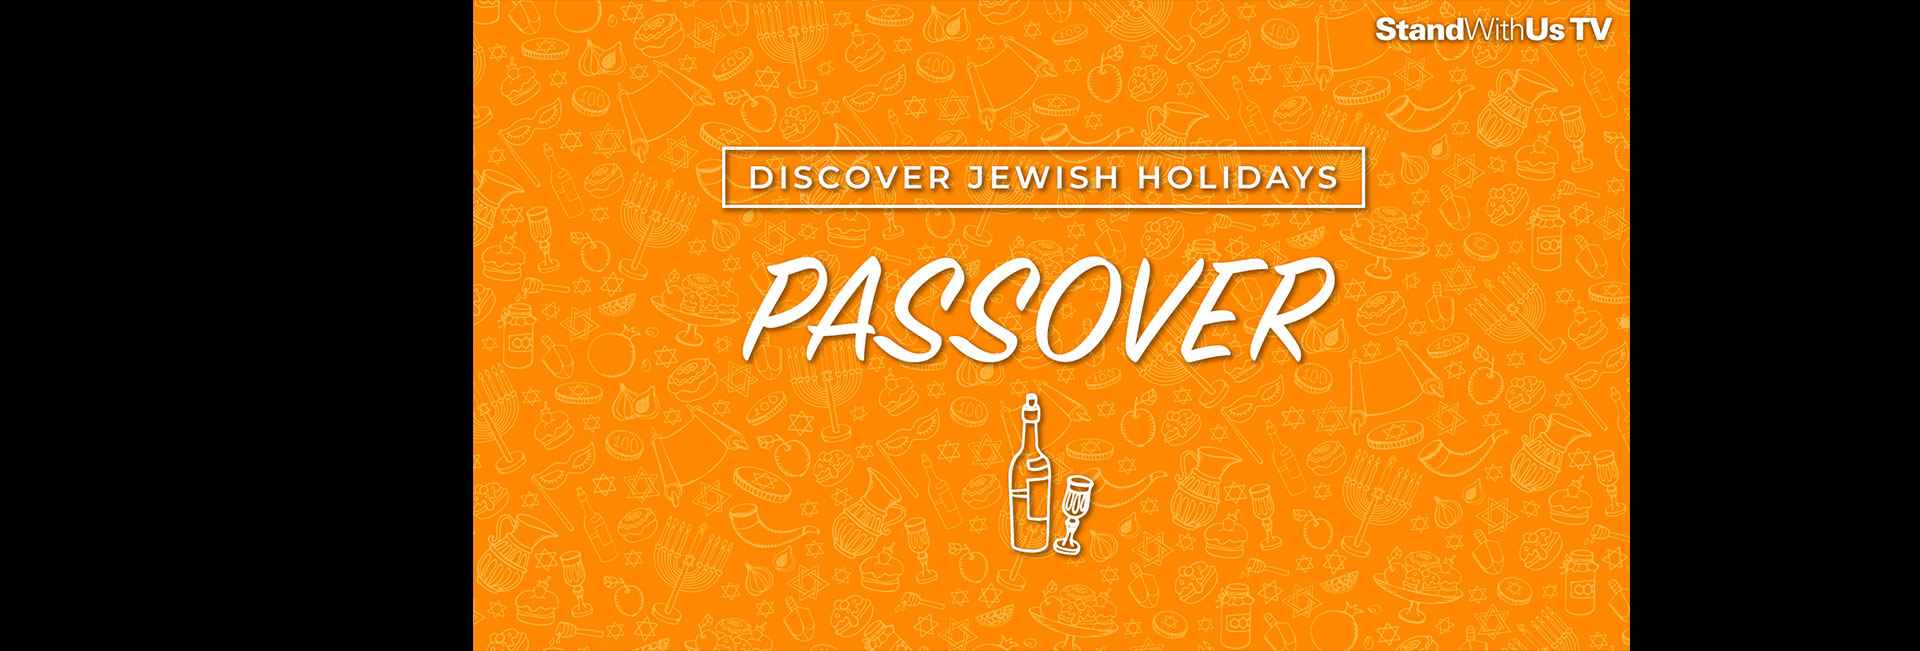 Discover Jewish Holidays: Passover